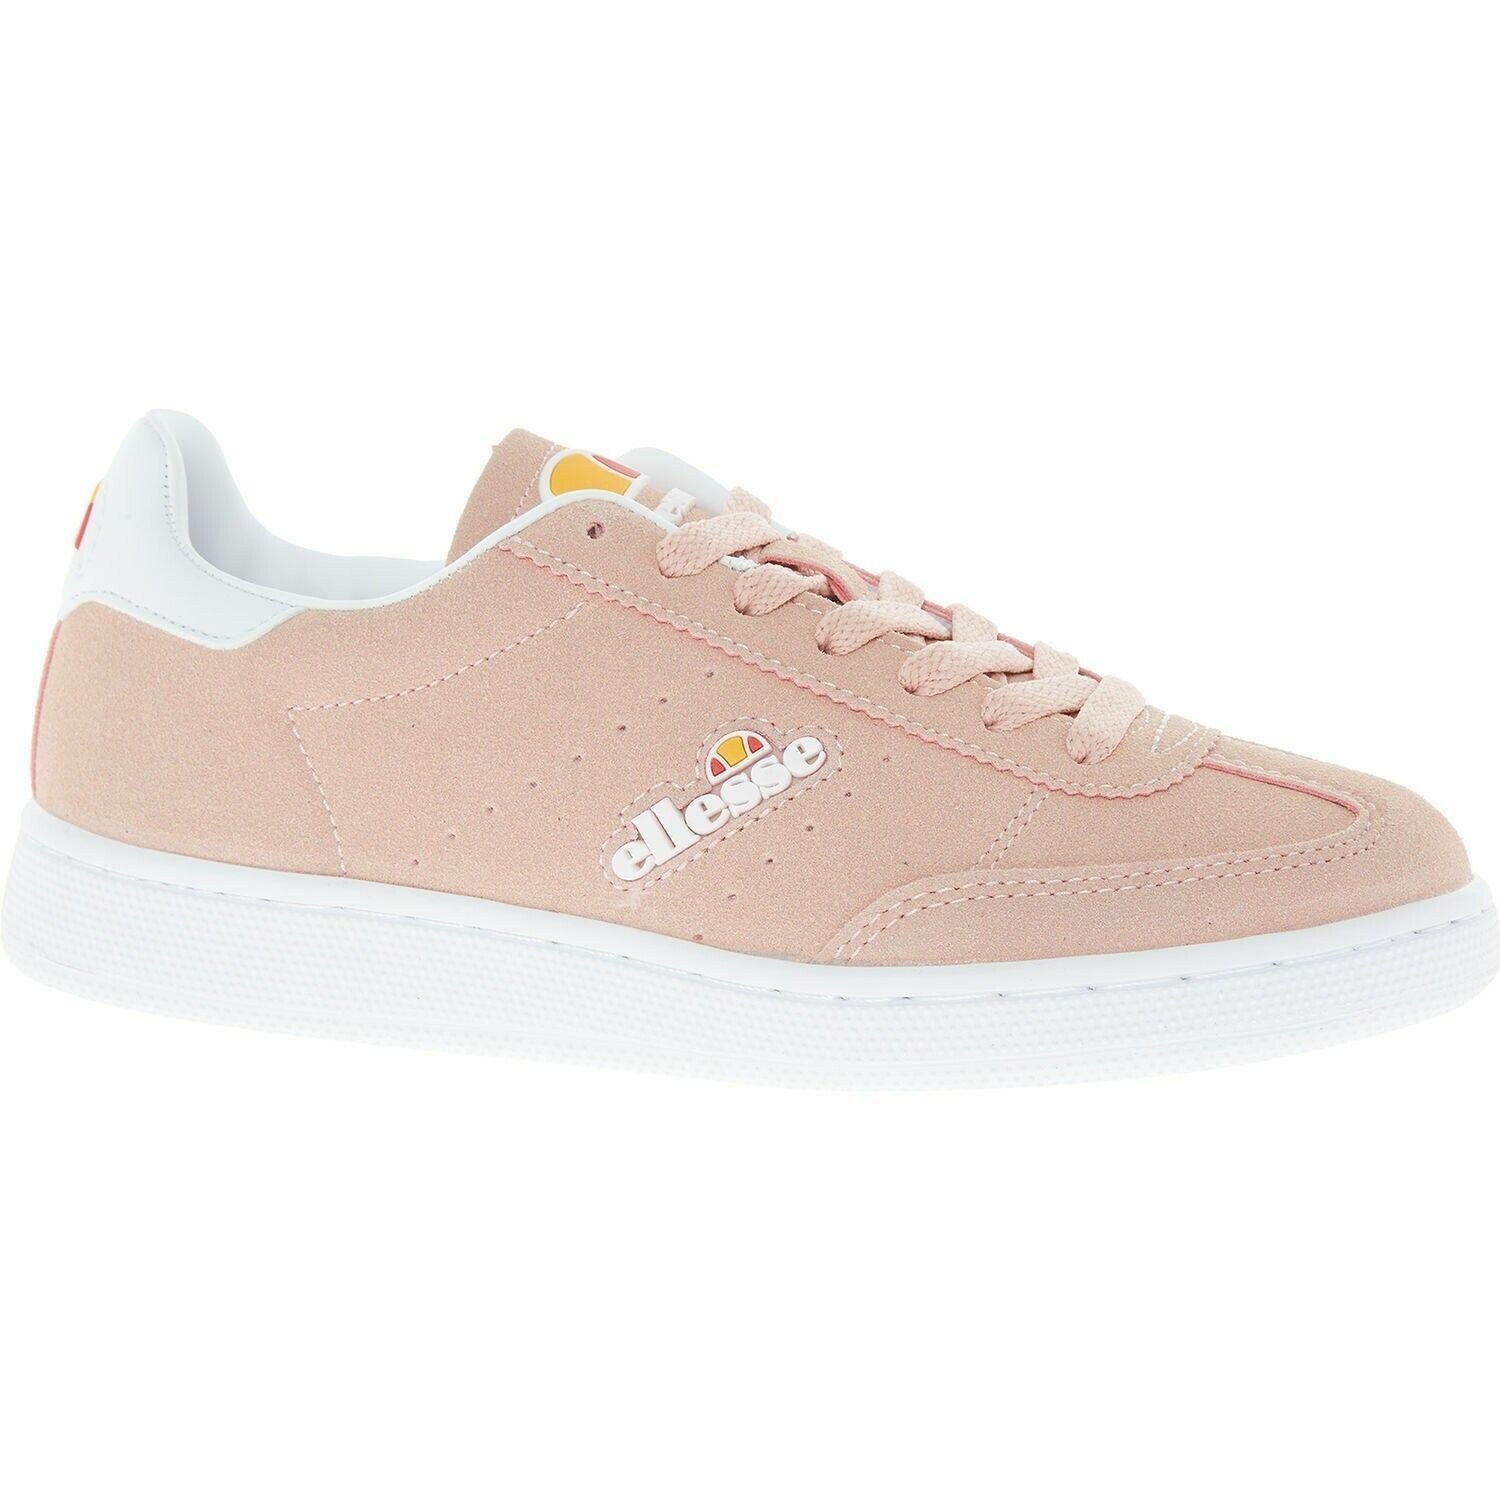 ELLESSE Women's NAPOLI Trainers Sneakers, Pink, size UK 3 /EU 36